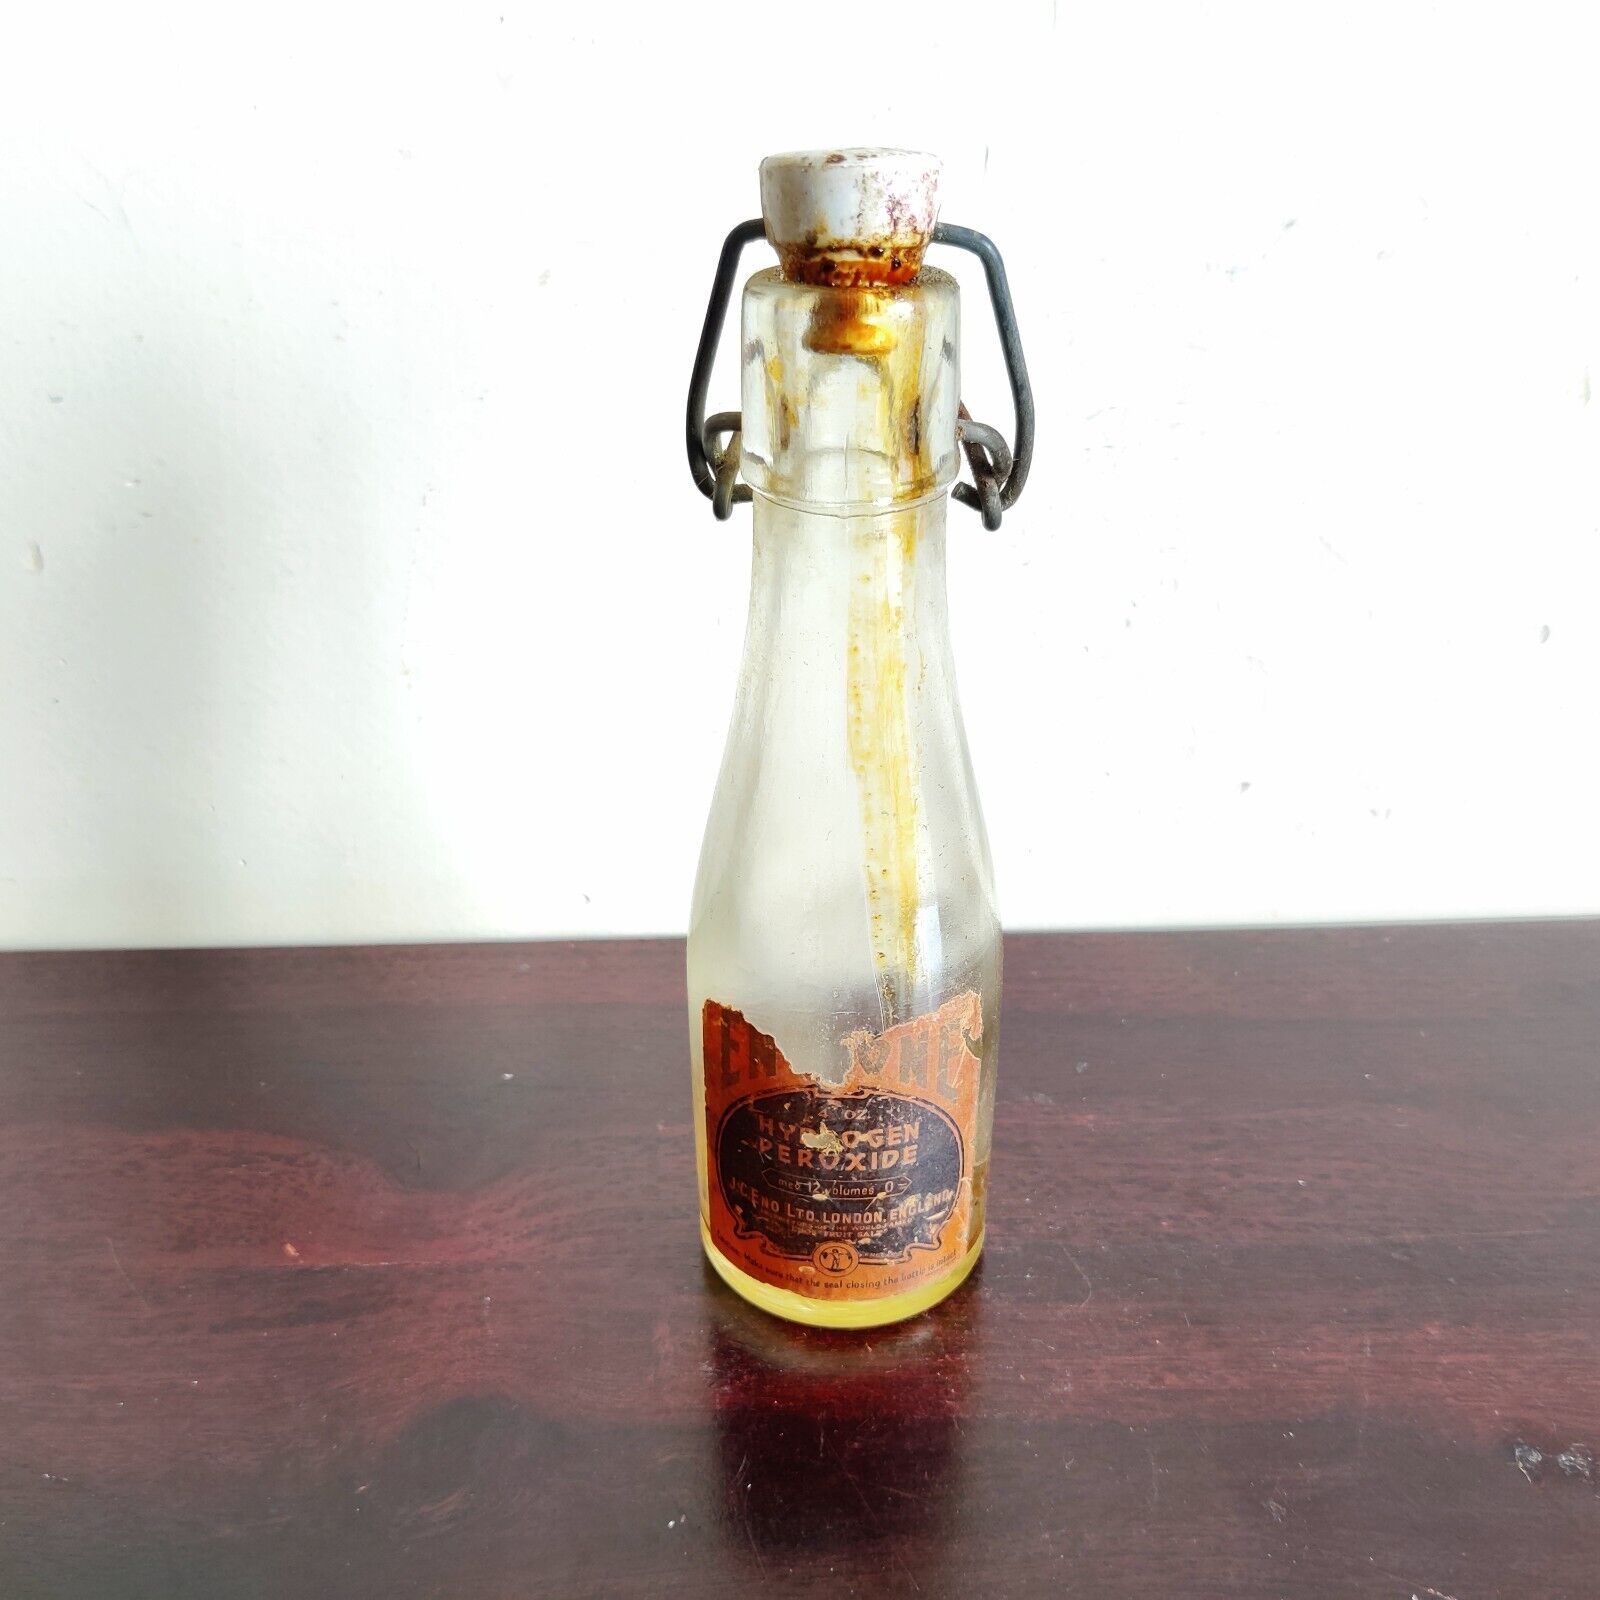 1930s Vintage Hydrogen Peroxide J C Eno Ltd Clear Glass Bottle Decorative G974